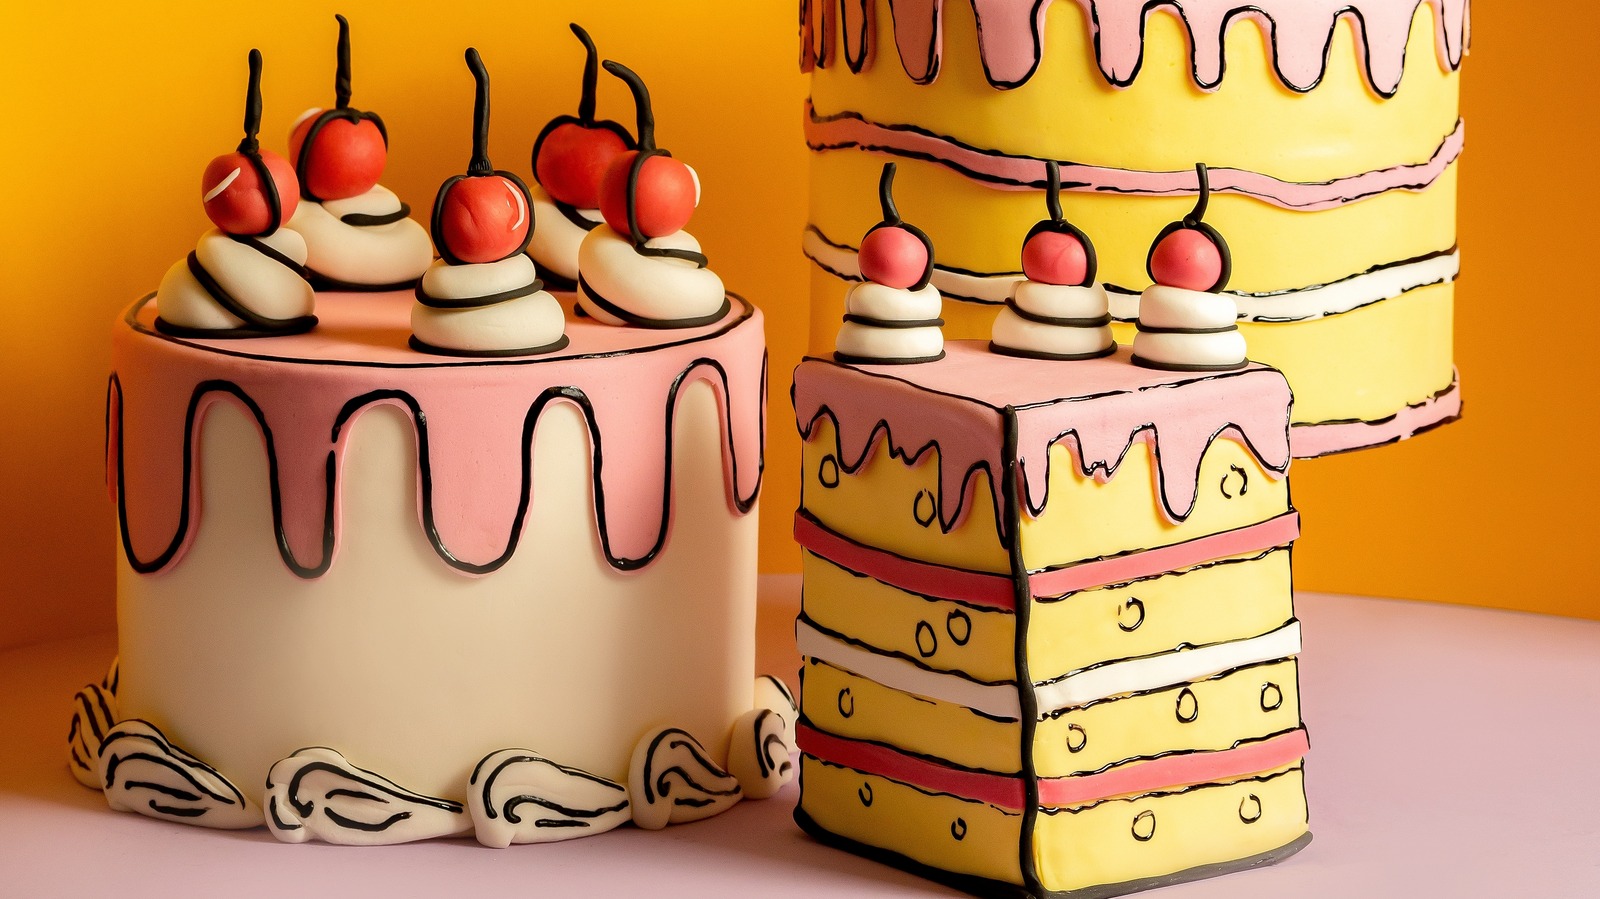 Travel Theme Cake | Customised Cakes Online by Kukkr